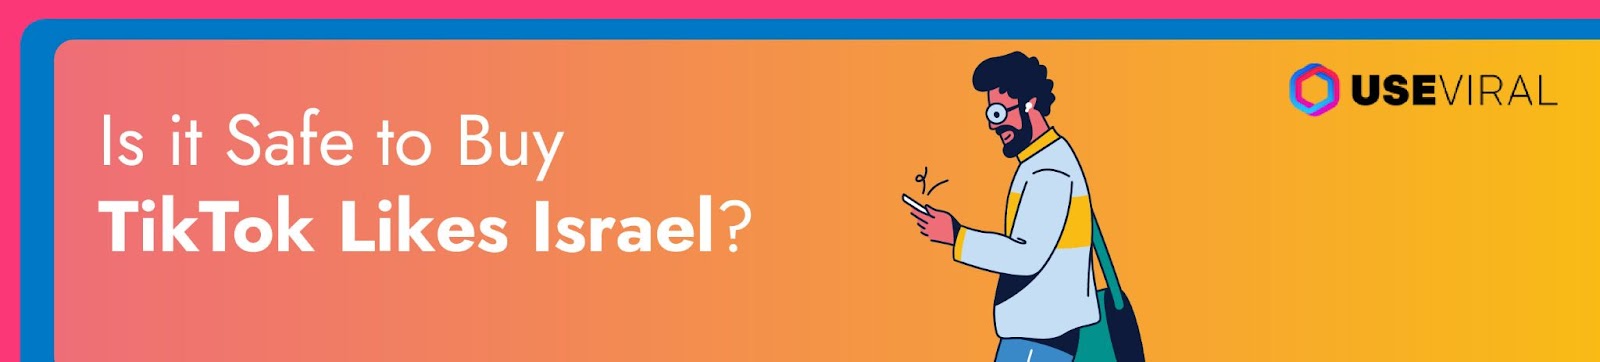 Is it safe to buy TikTok likes Israel?